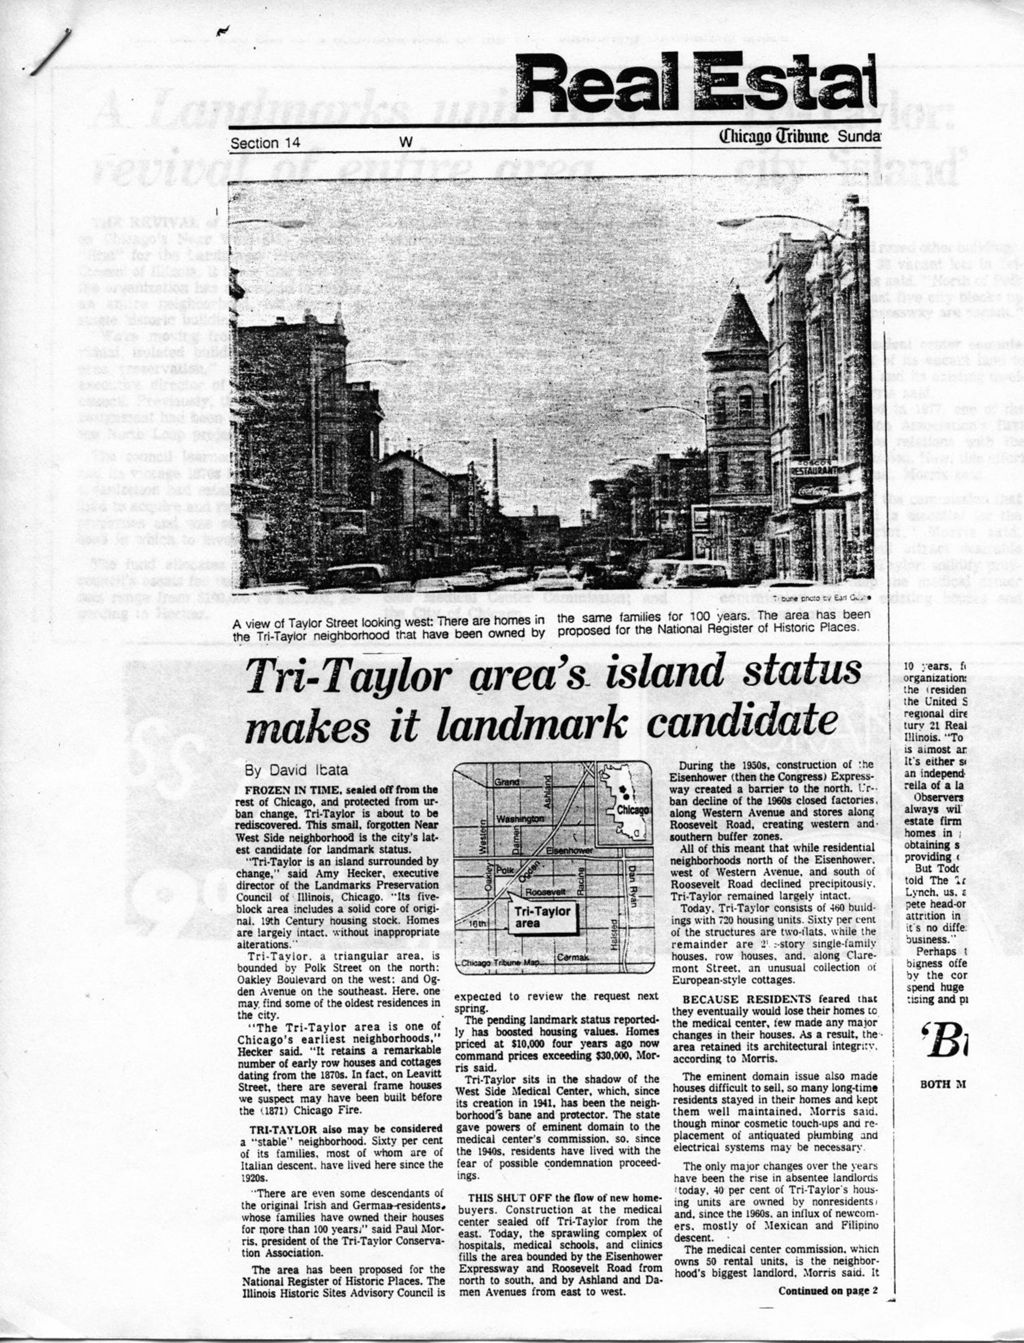 Tri-Taylor area: Chicago Tribune article